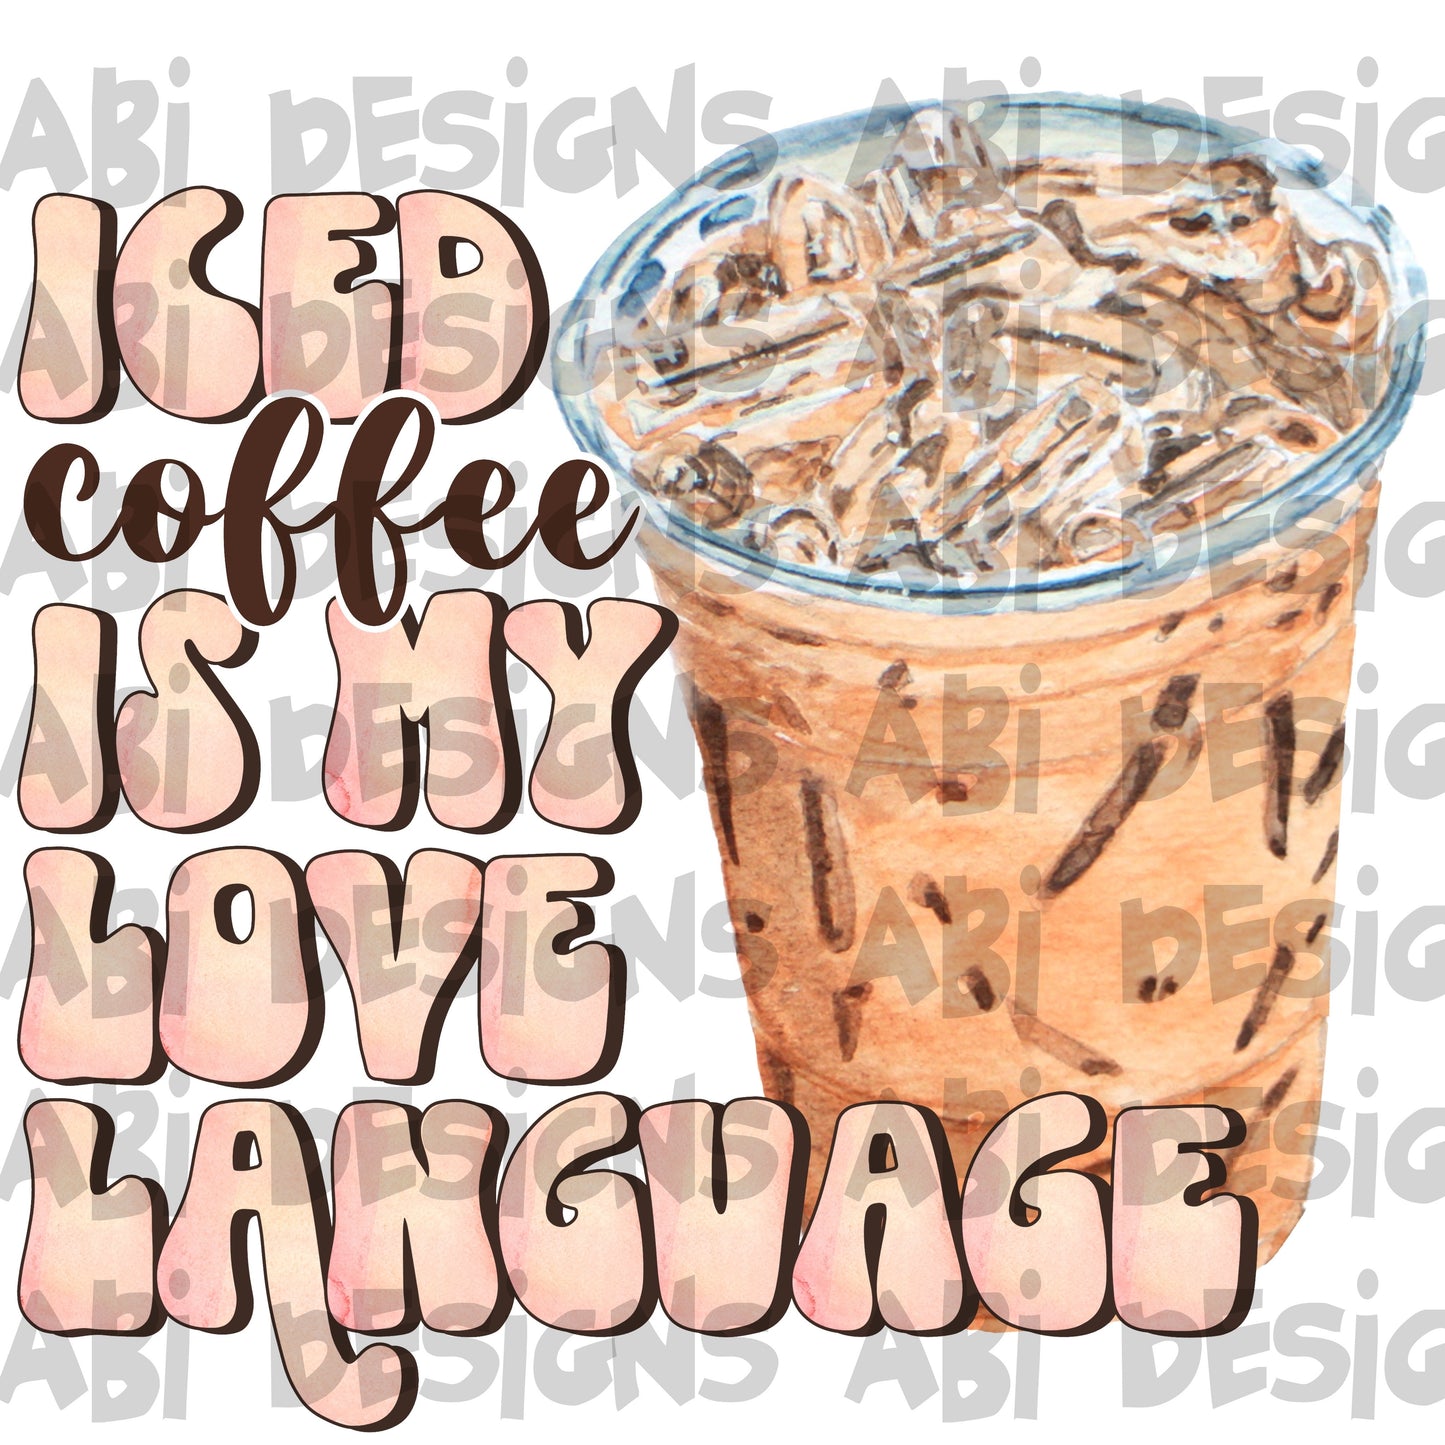 Iced coffee is my language-DTF